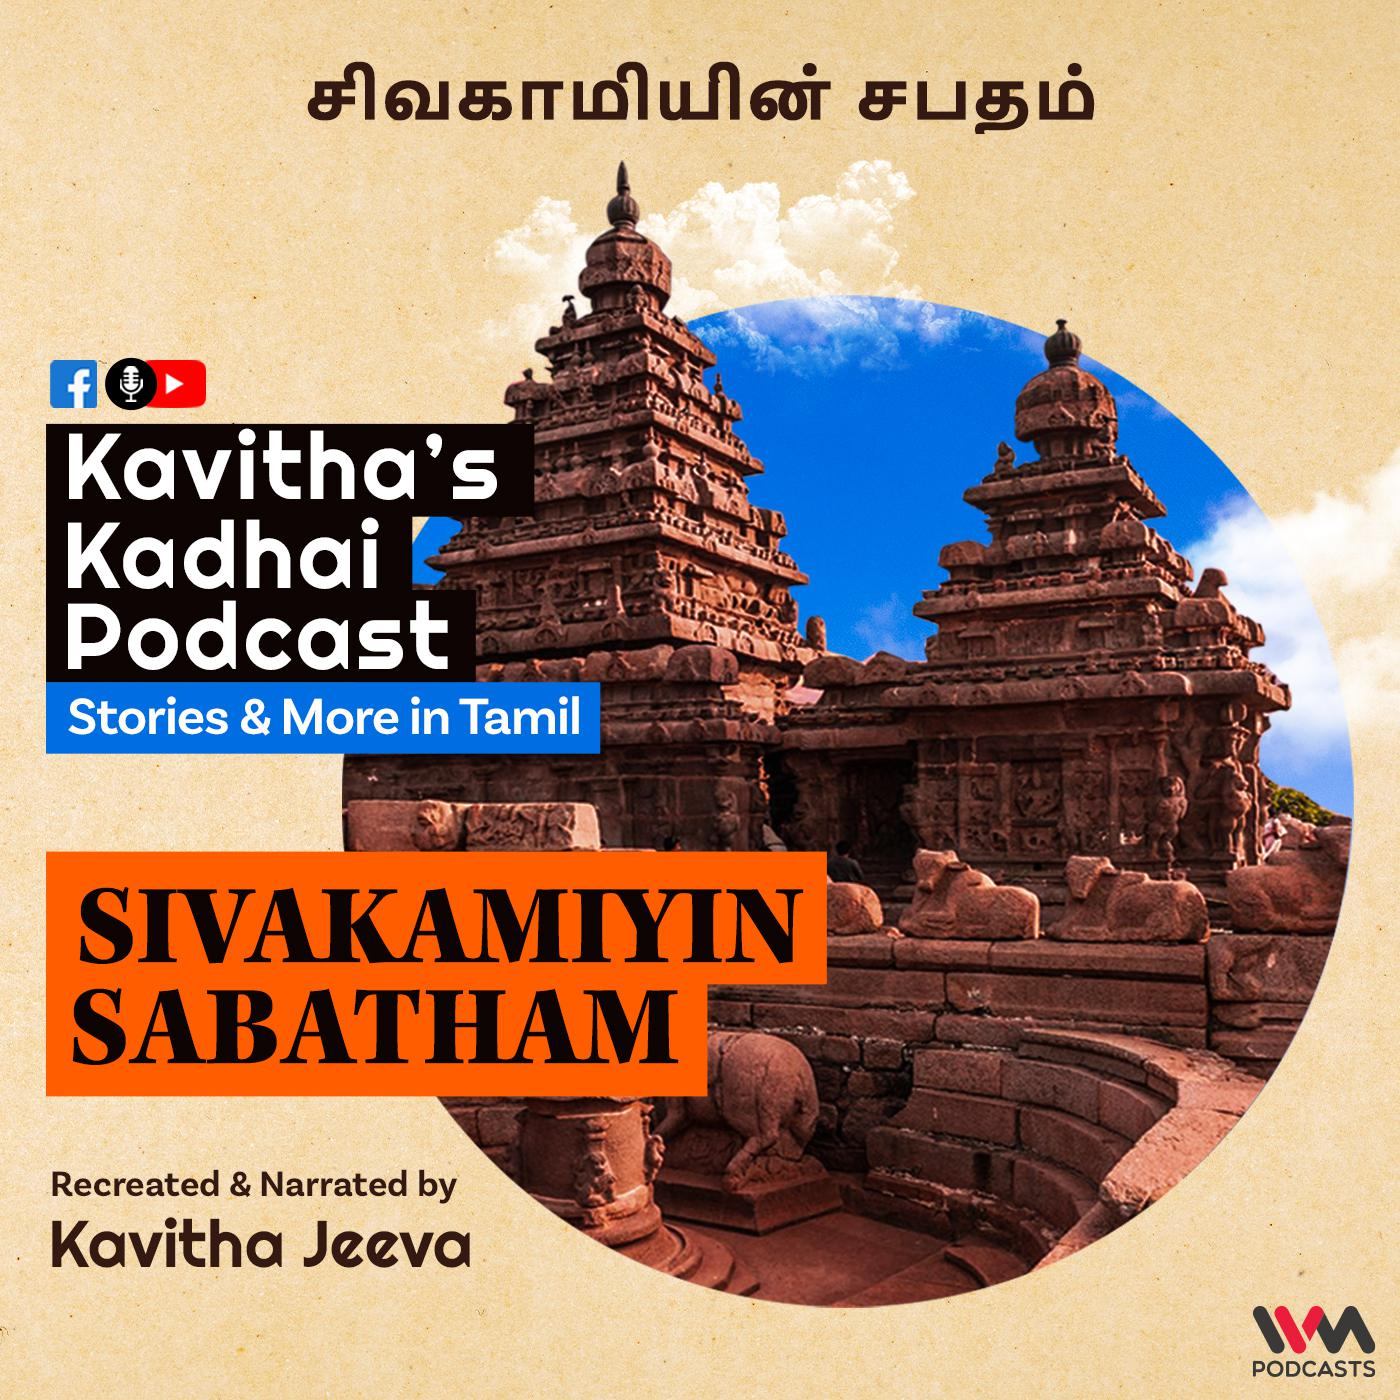 KadhaiPodcast's Sivakamiyin Sabatham with Kavitha Jeeva - Episode #122